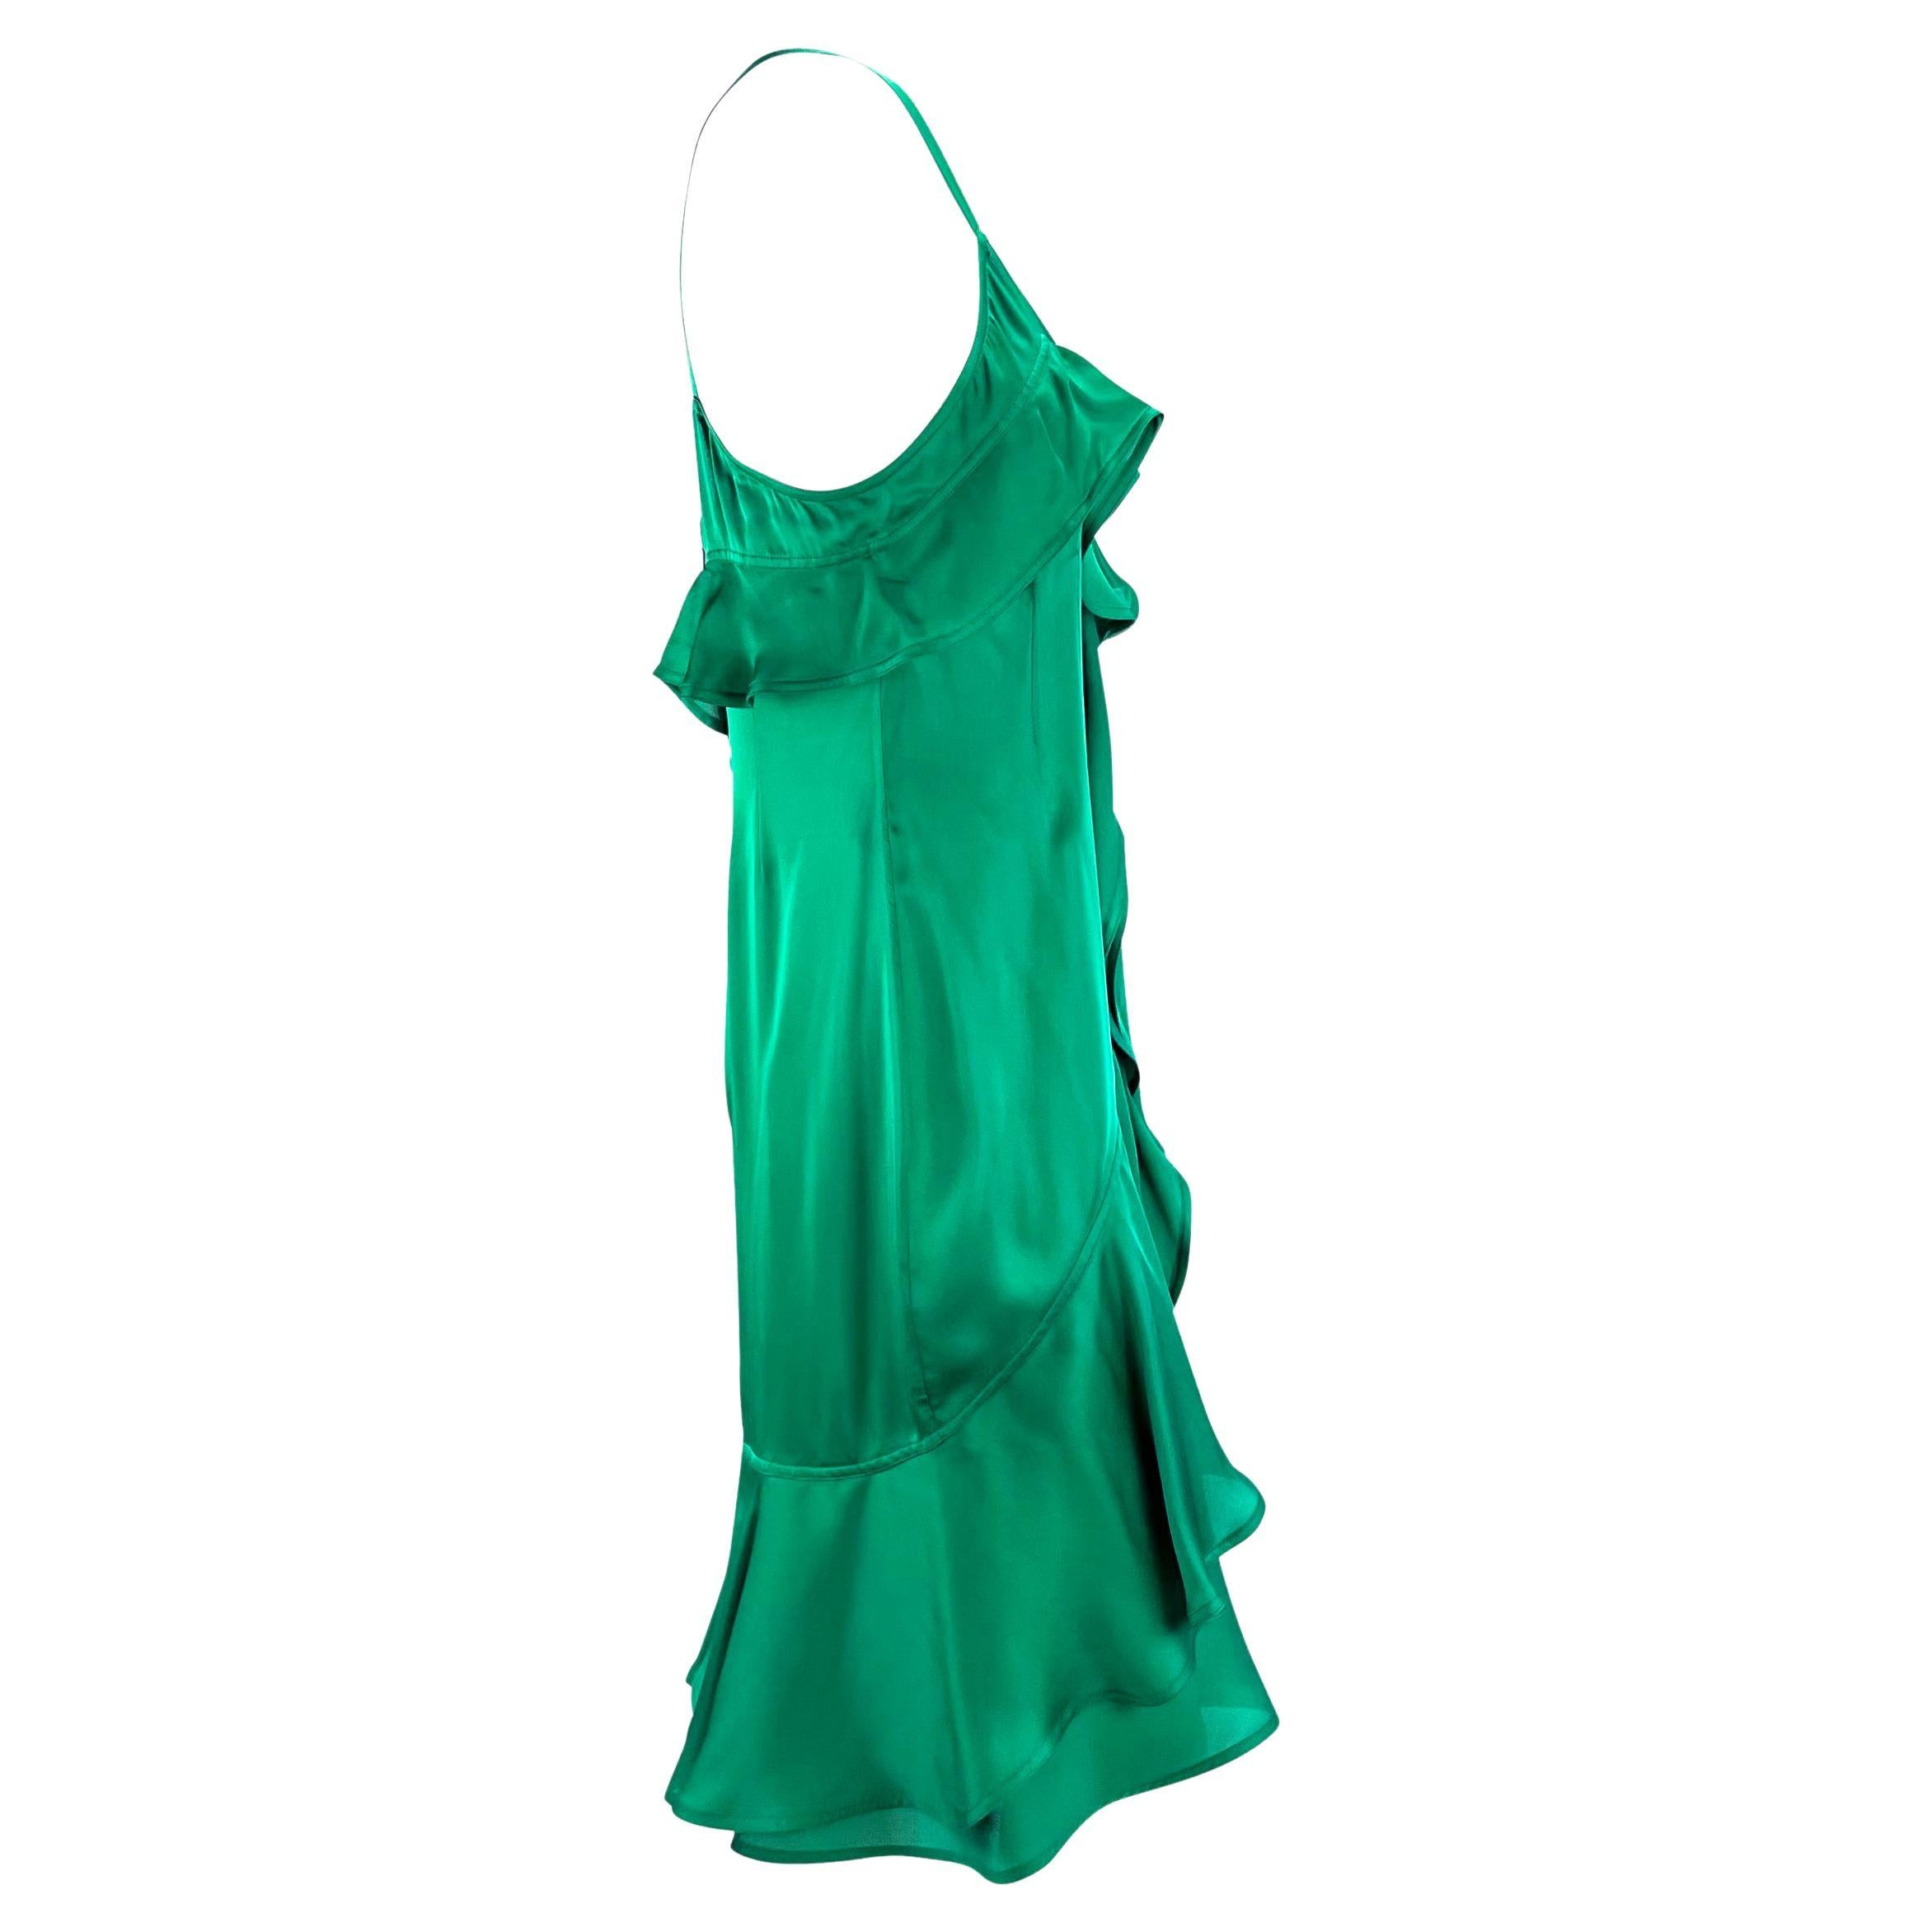 F/W 2003 Yves Saint Laurent by Tom Ford Runway Emerald Green Ruffle Silk Dress For Sale 2